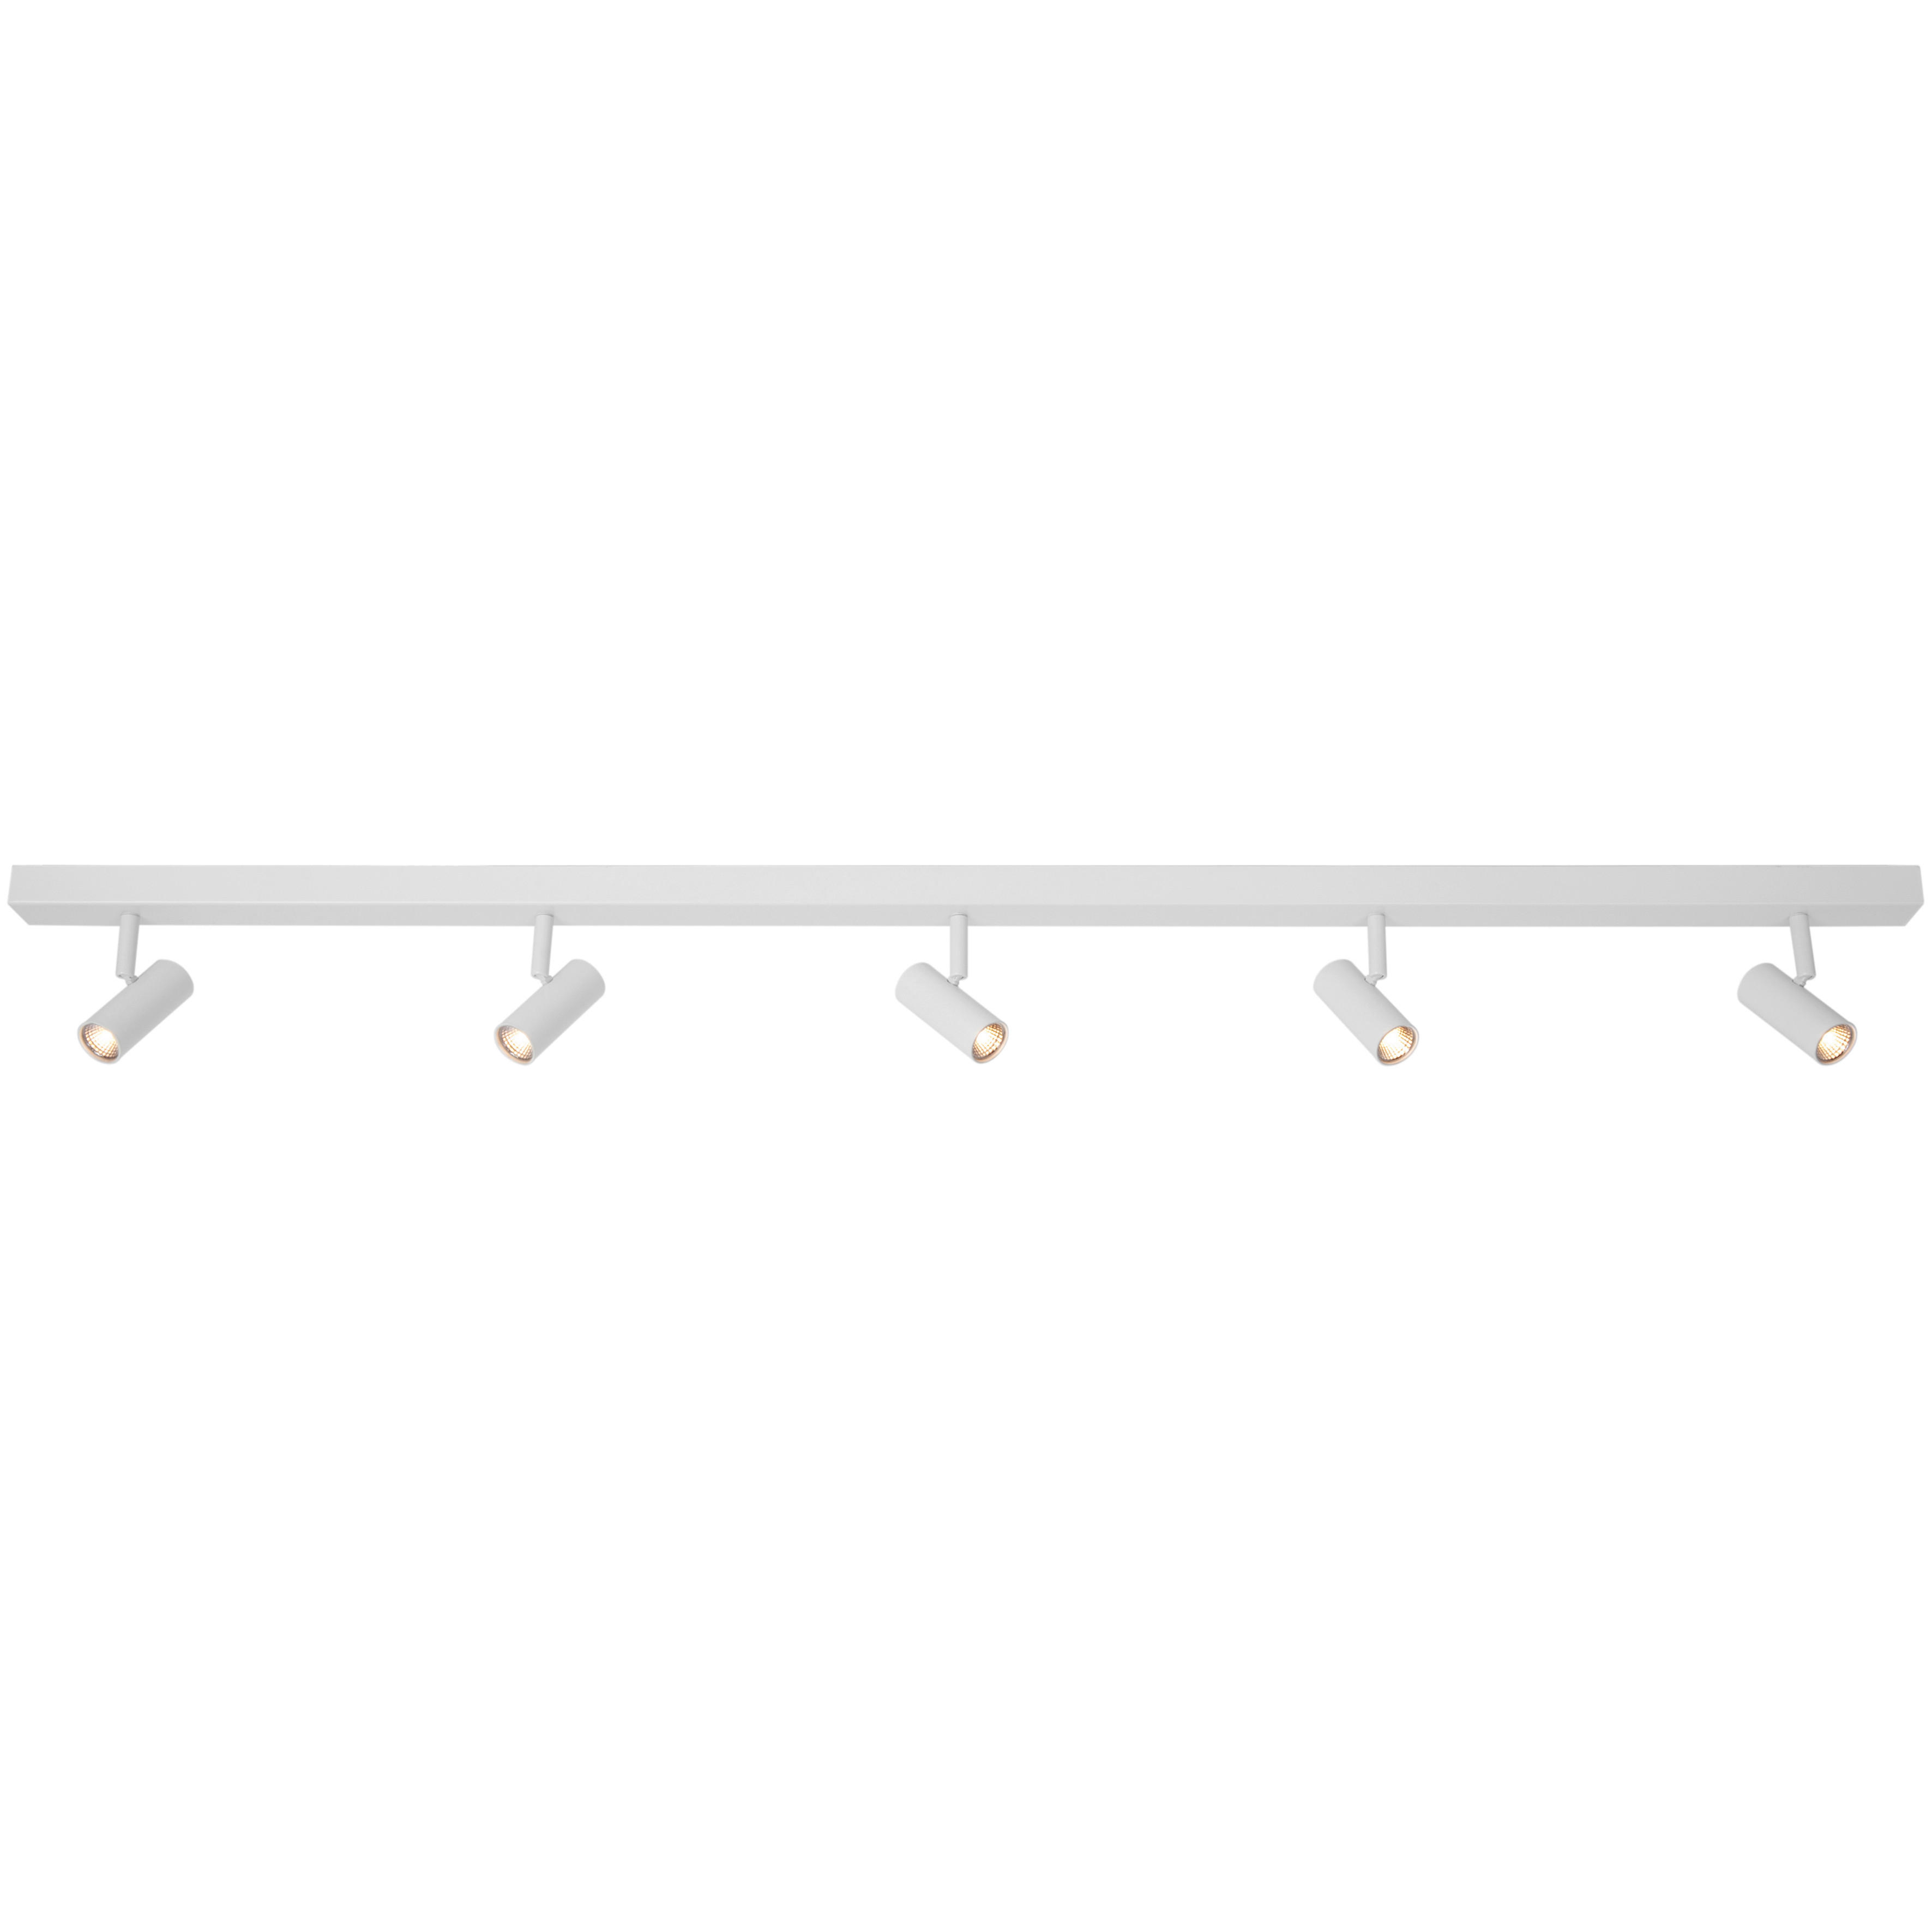 LED-STRAHLER OMARI  - Weiß, Design, Metall (118/12/3,5cm) - Nordlux